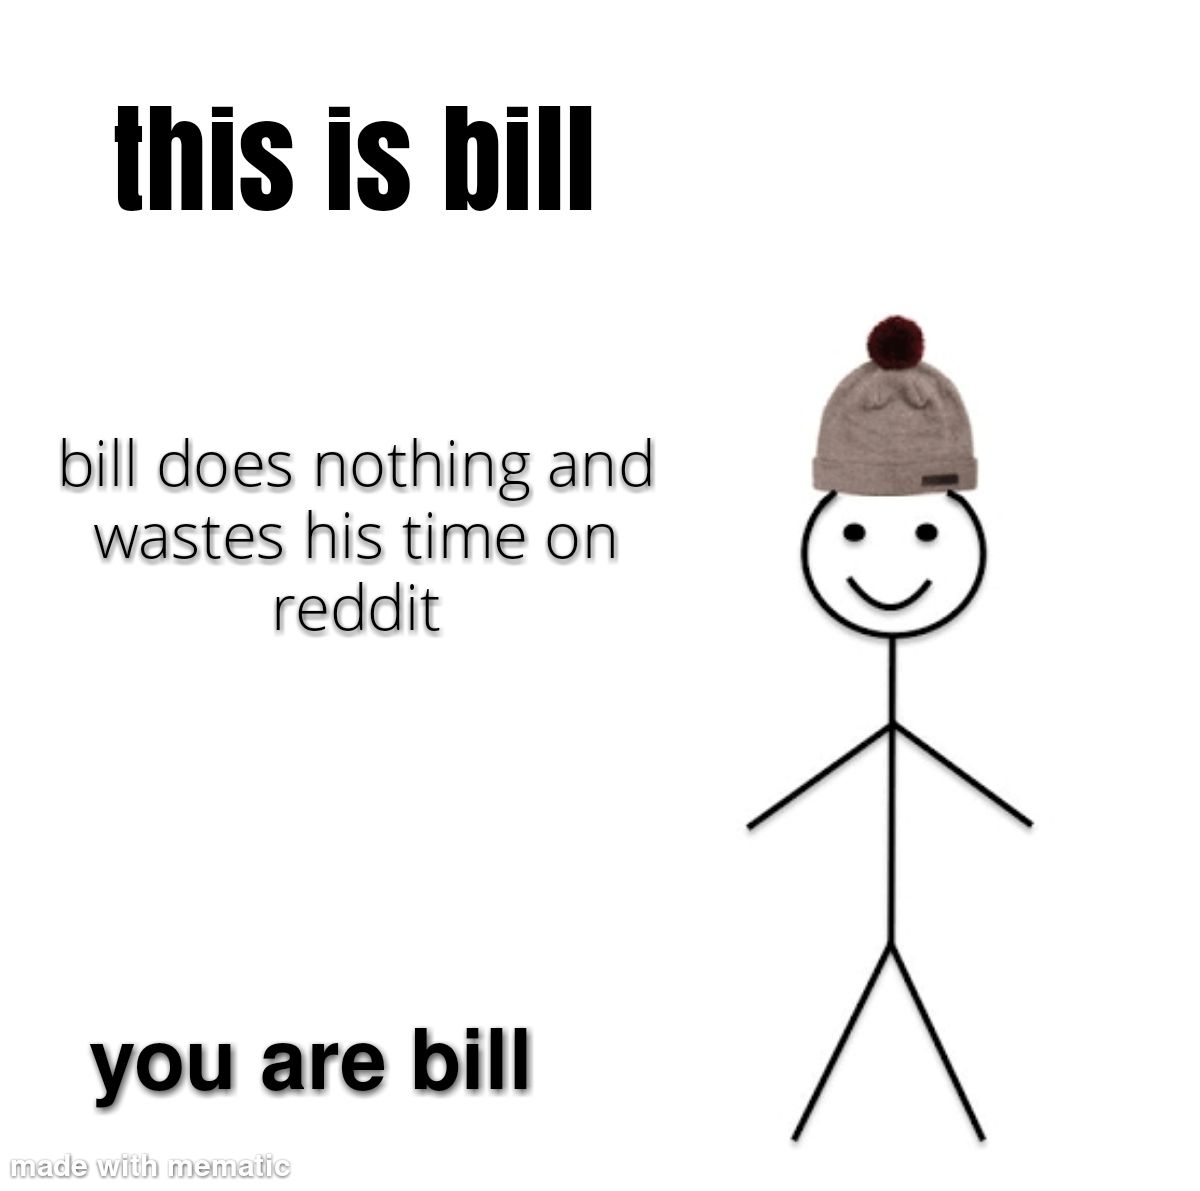 hi, my name is bill